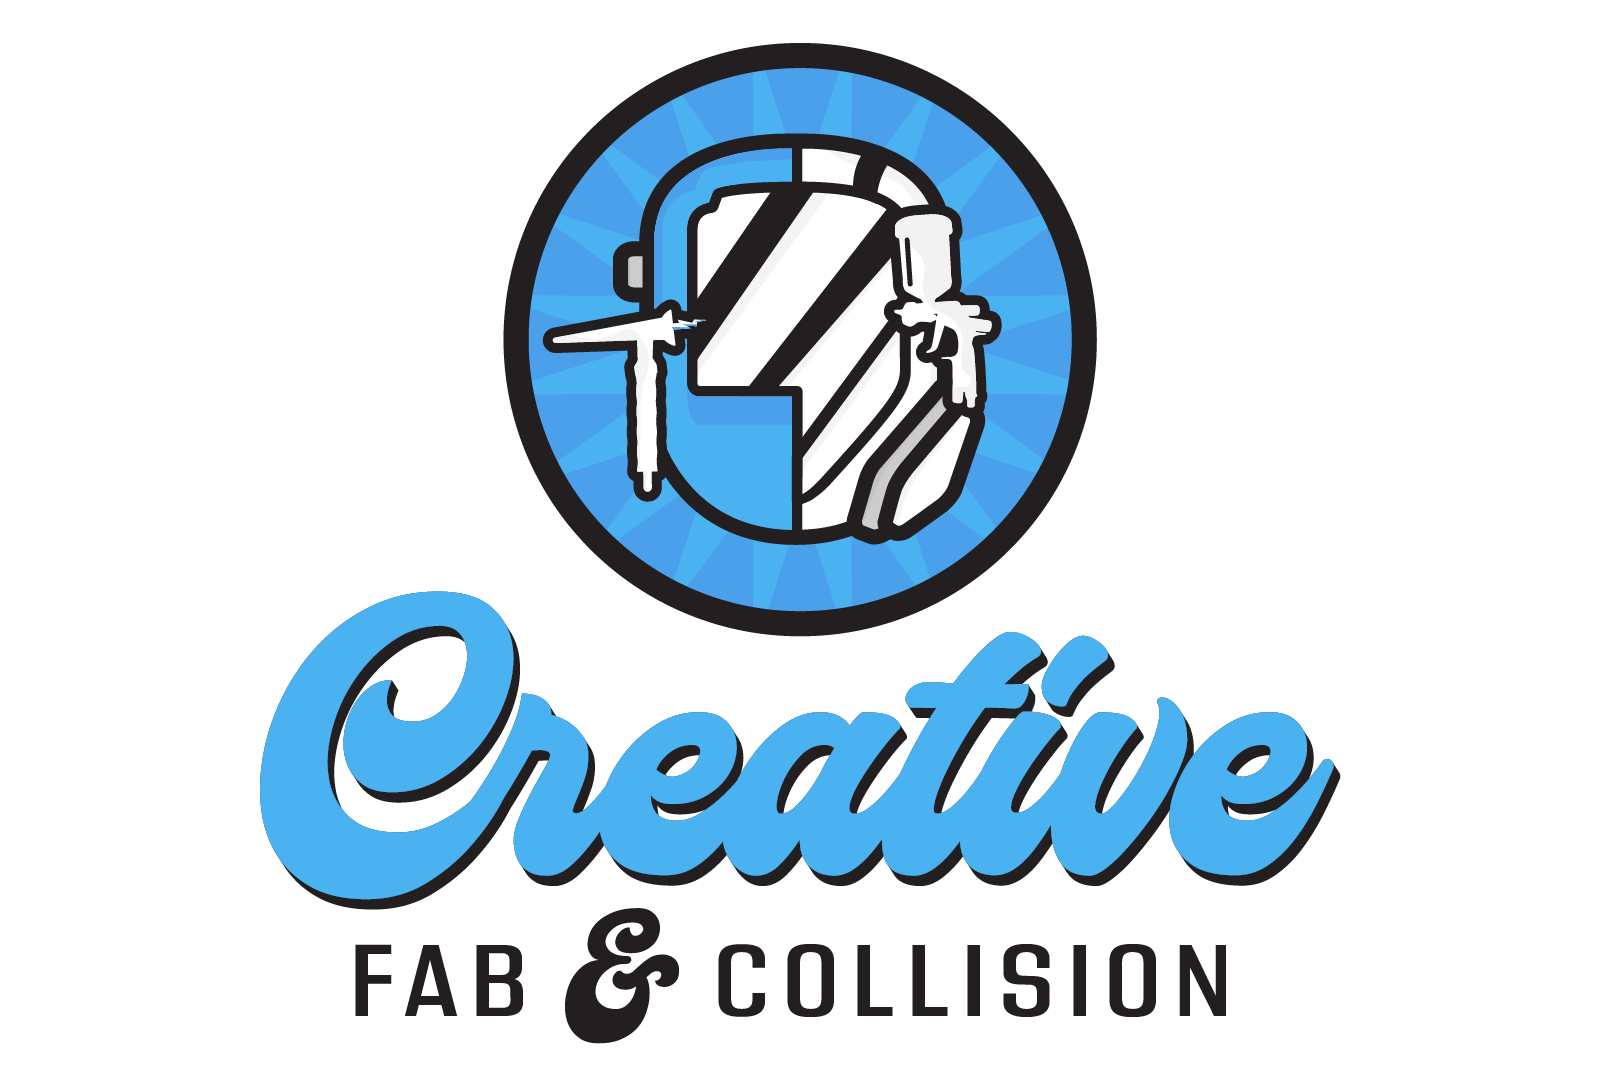 Creative Fab & Collision Logo by Grant Toranzo on Dribbble